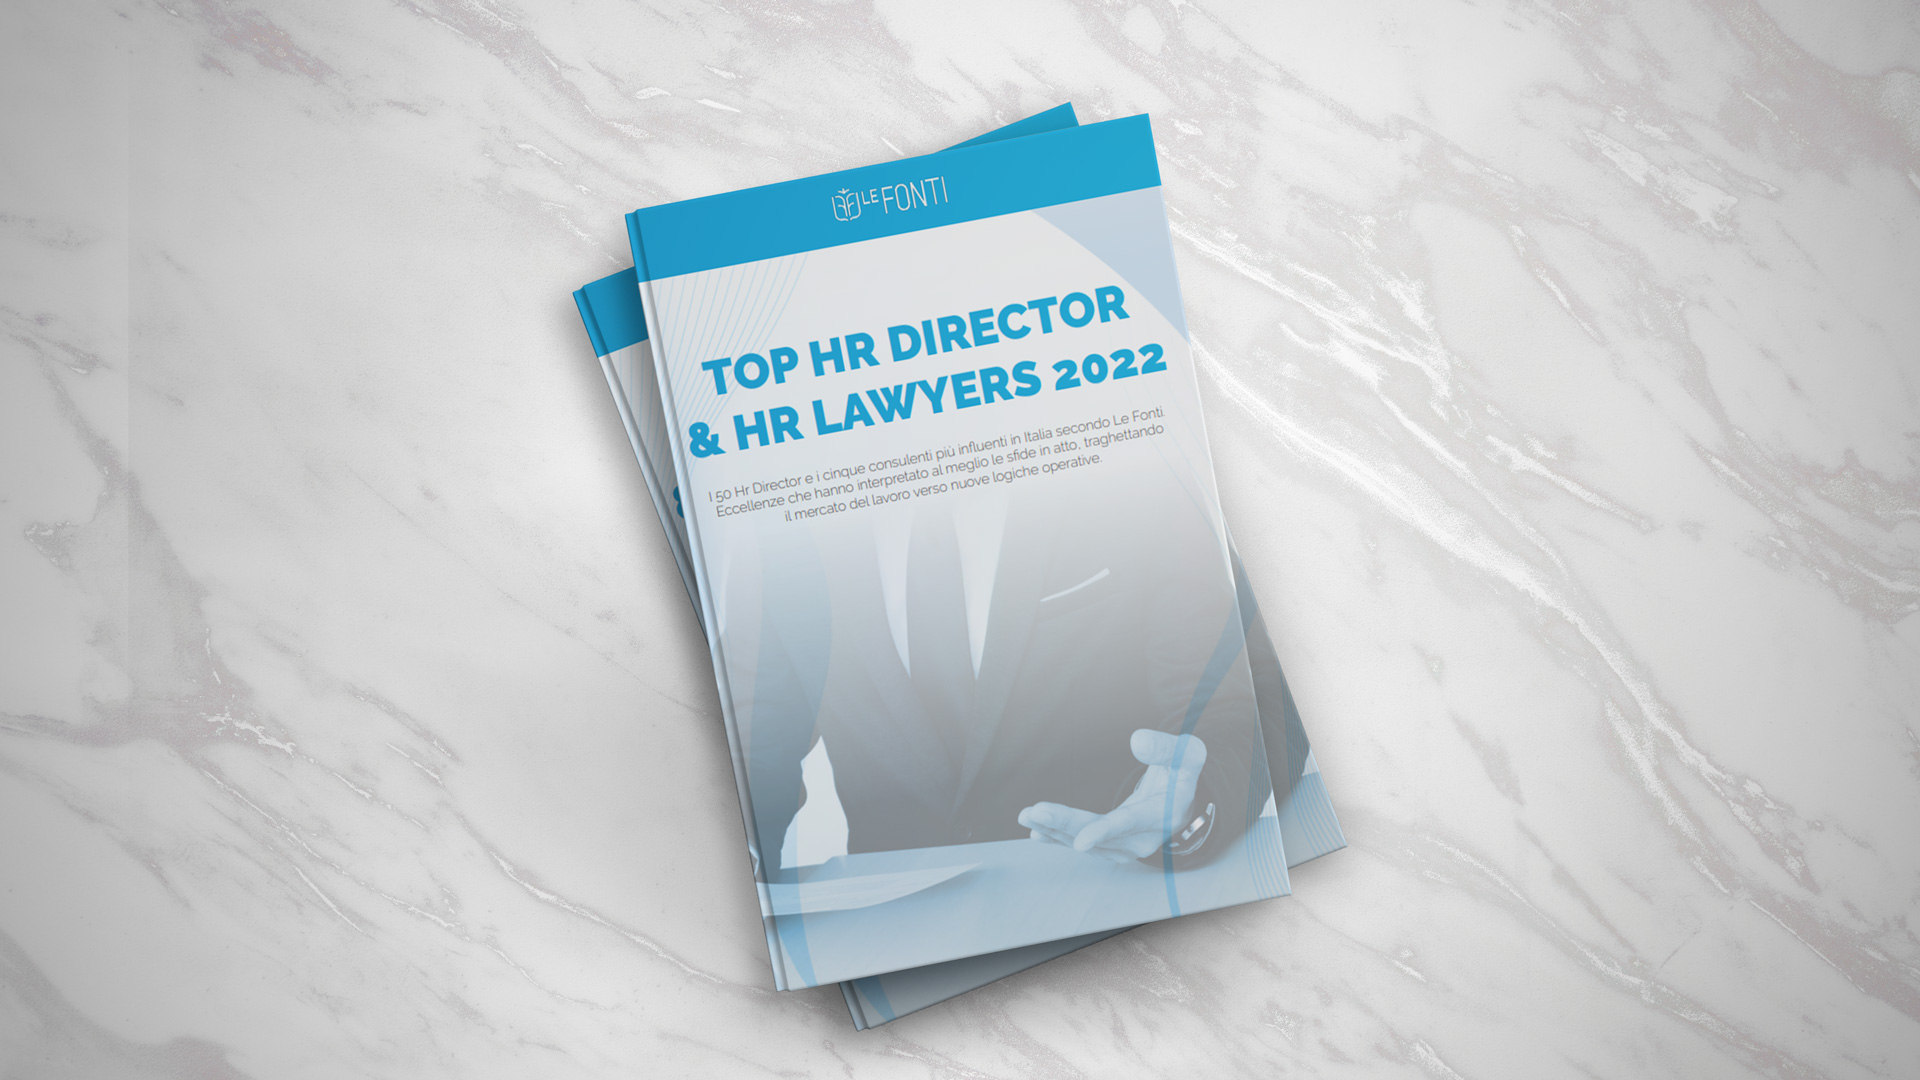 Top HR Director & HR Lawyers 2022